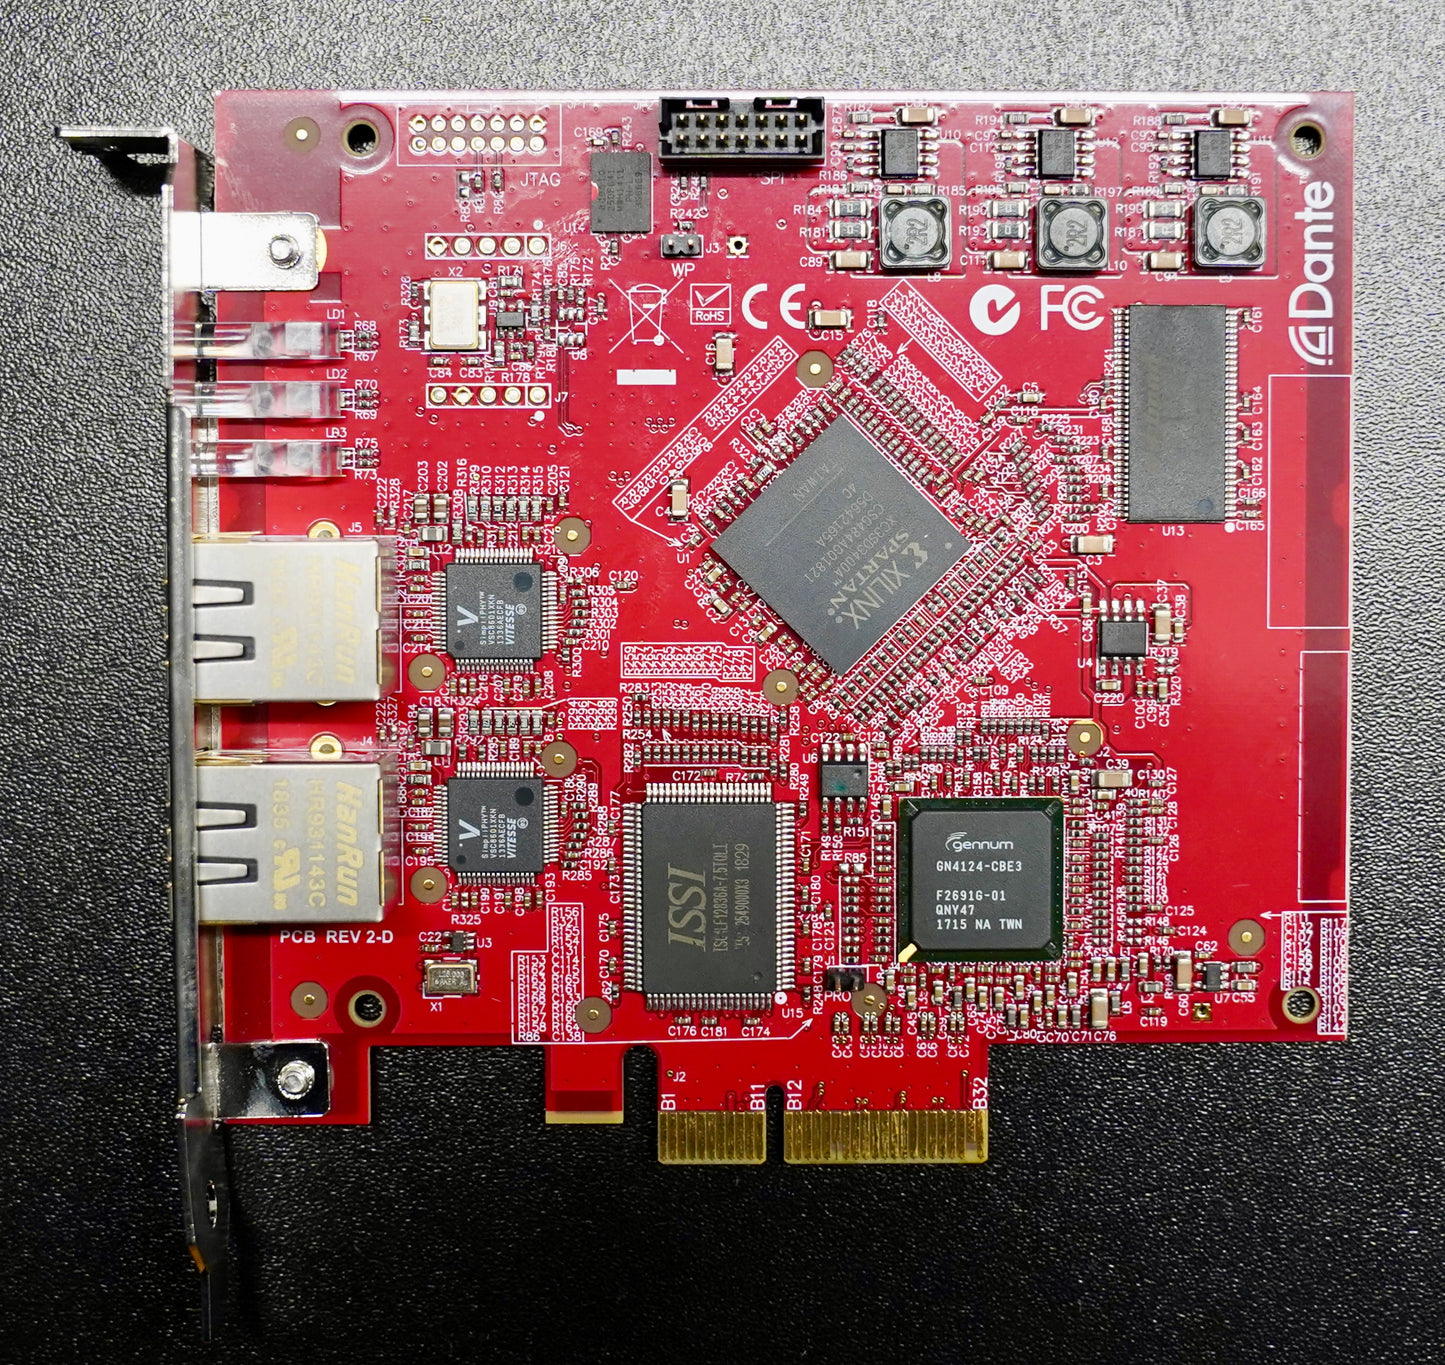 Focusrite Rednet PCIeR